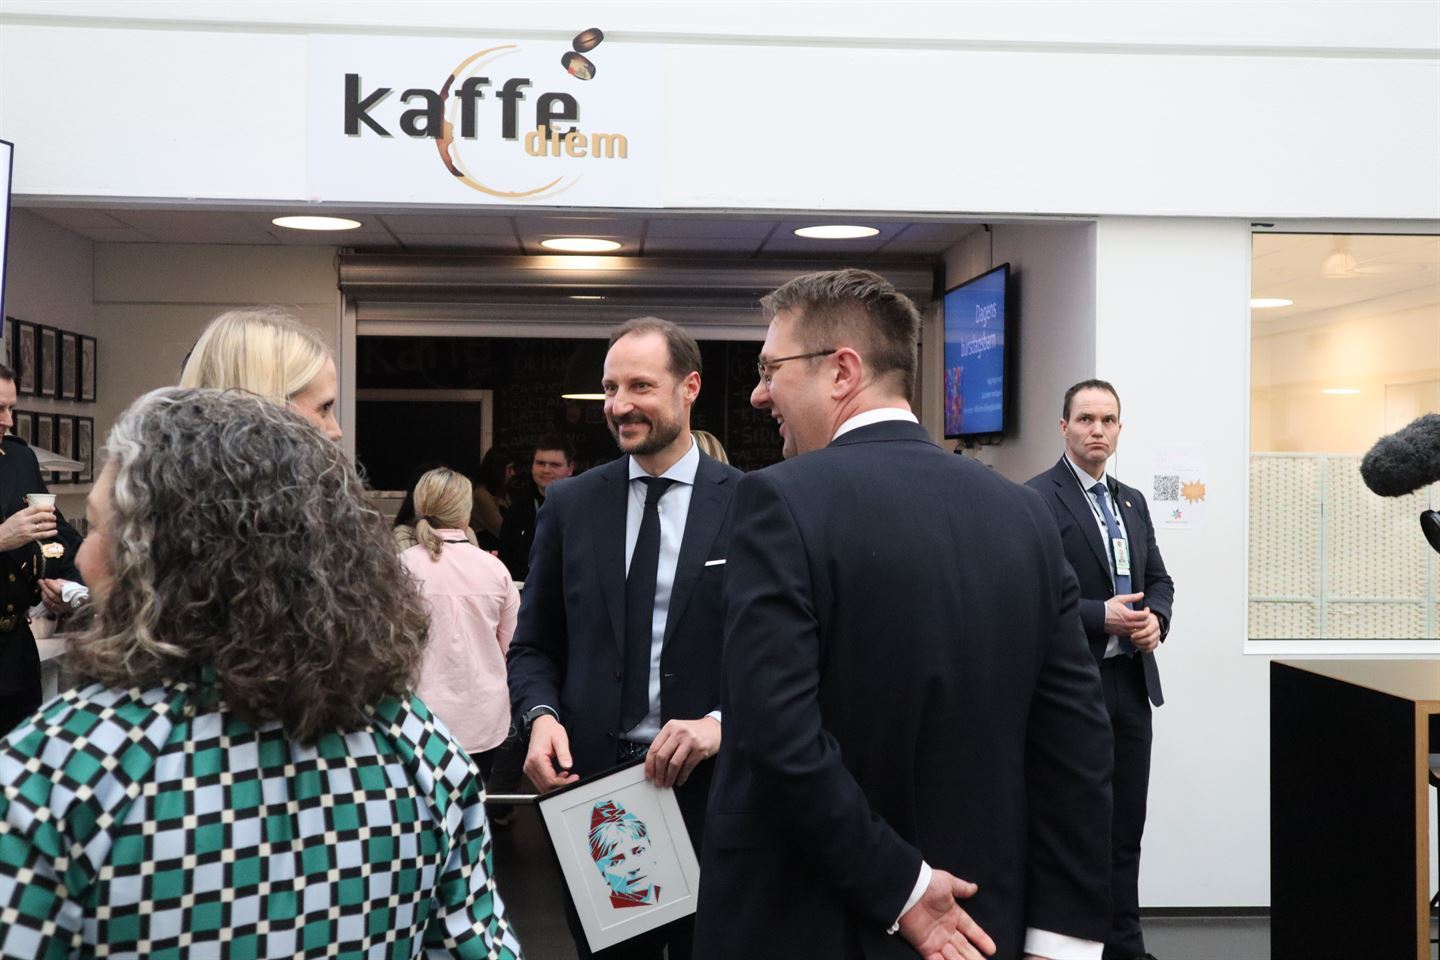 Kronprins Haakon kledd i dress snakker med to personer